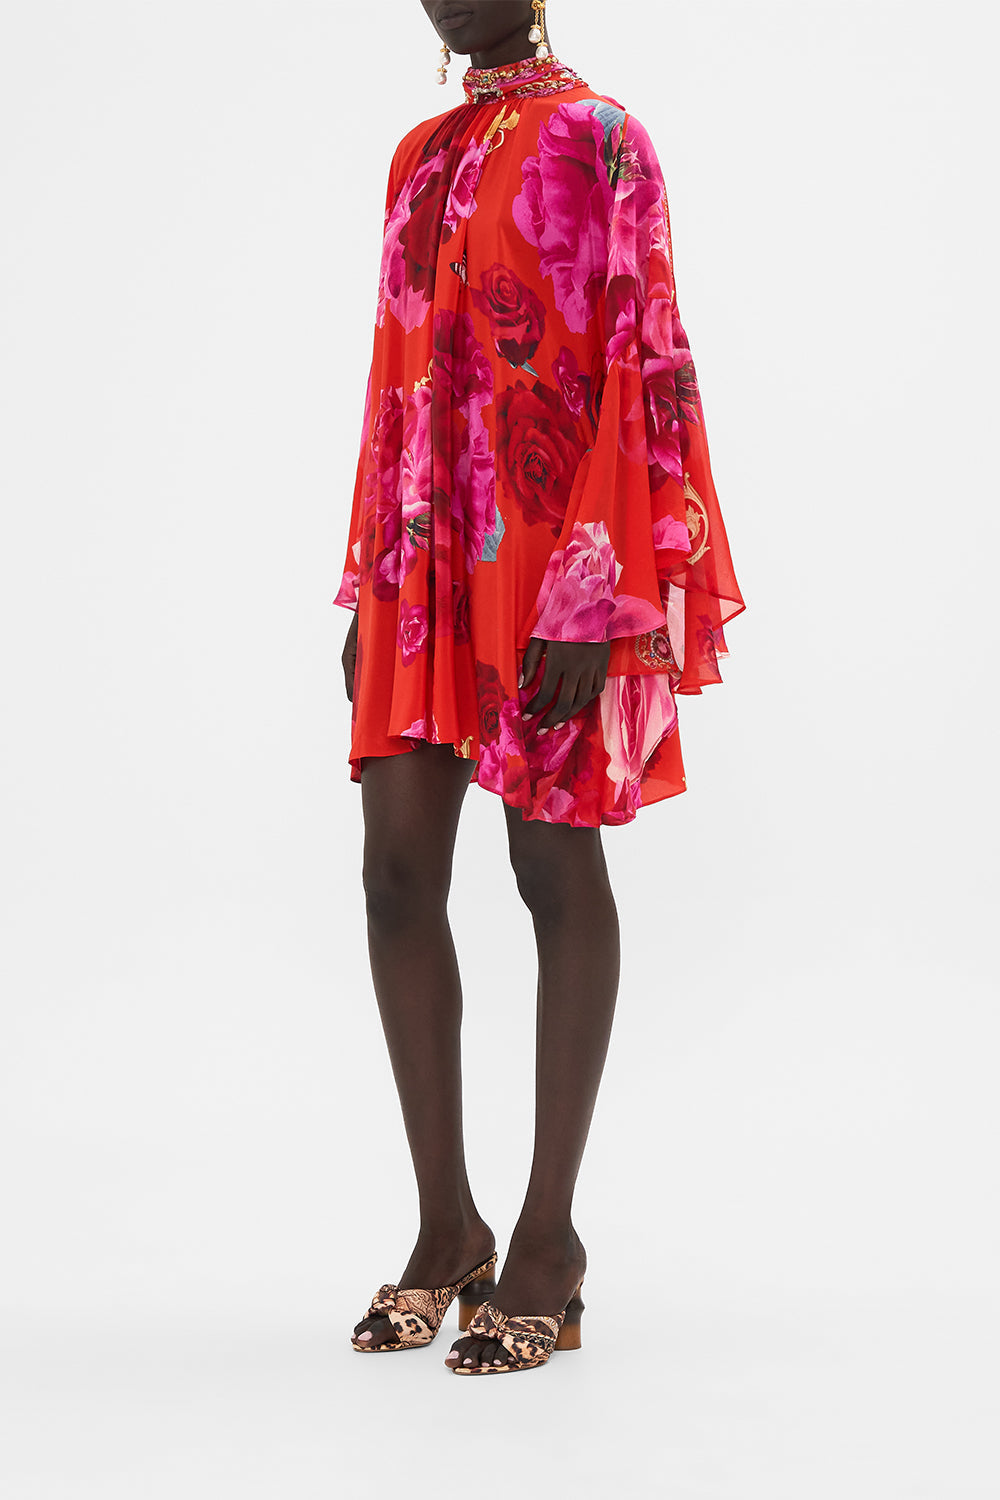 Side view of model wearing CAMILLA high neck silk dress in An Italian Rosa print